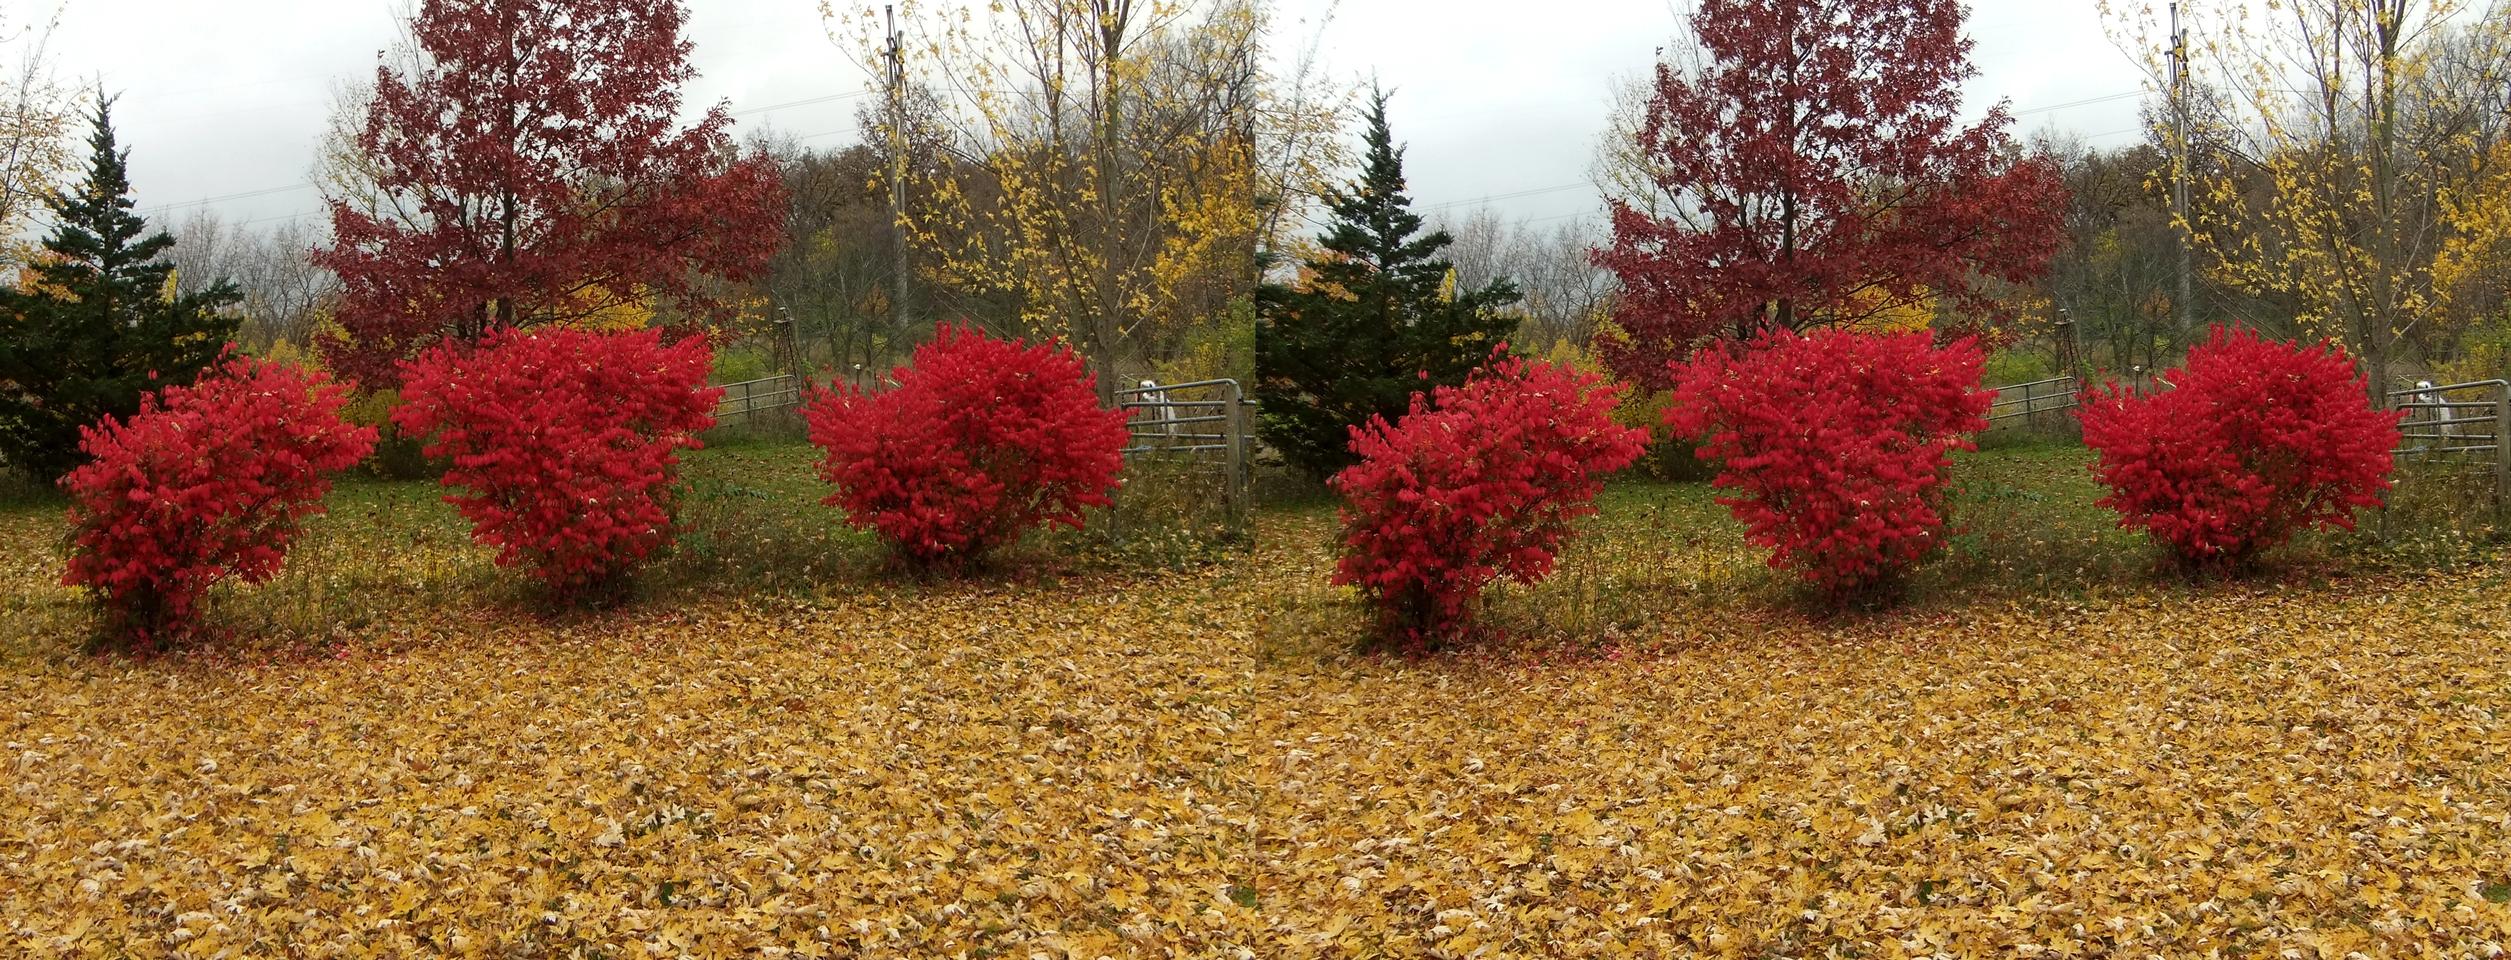 Dwarf burning bushes in autumn